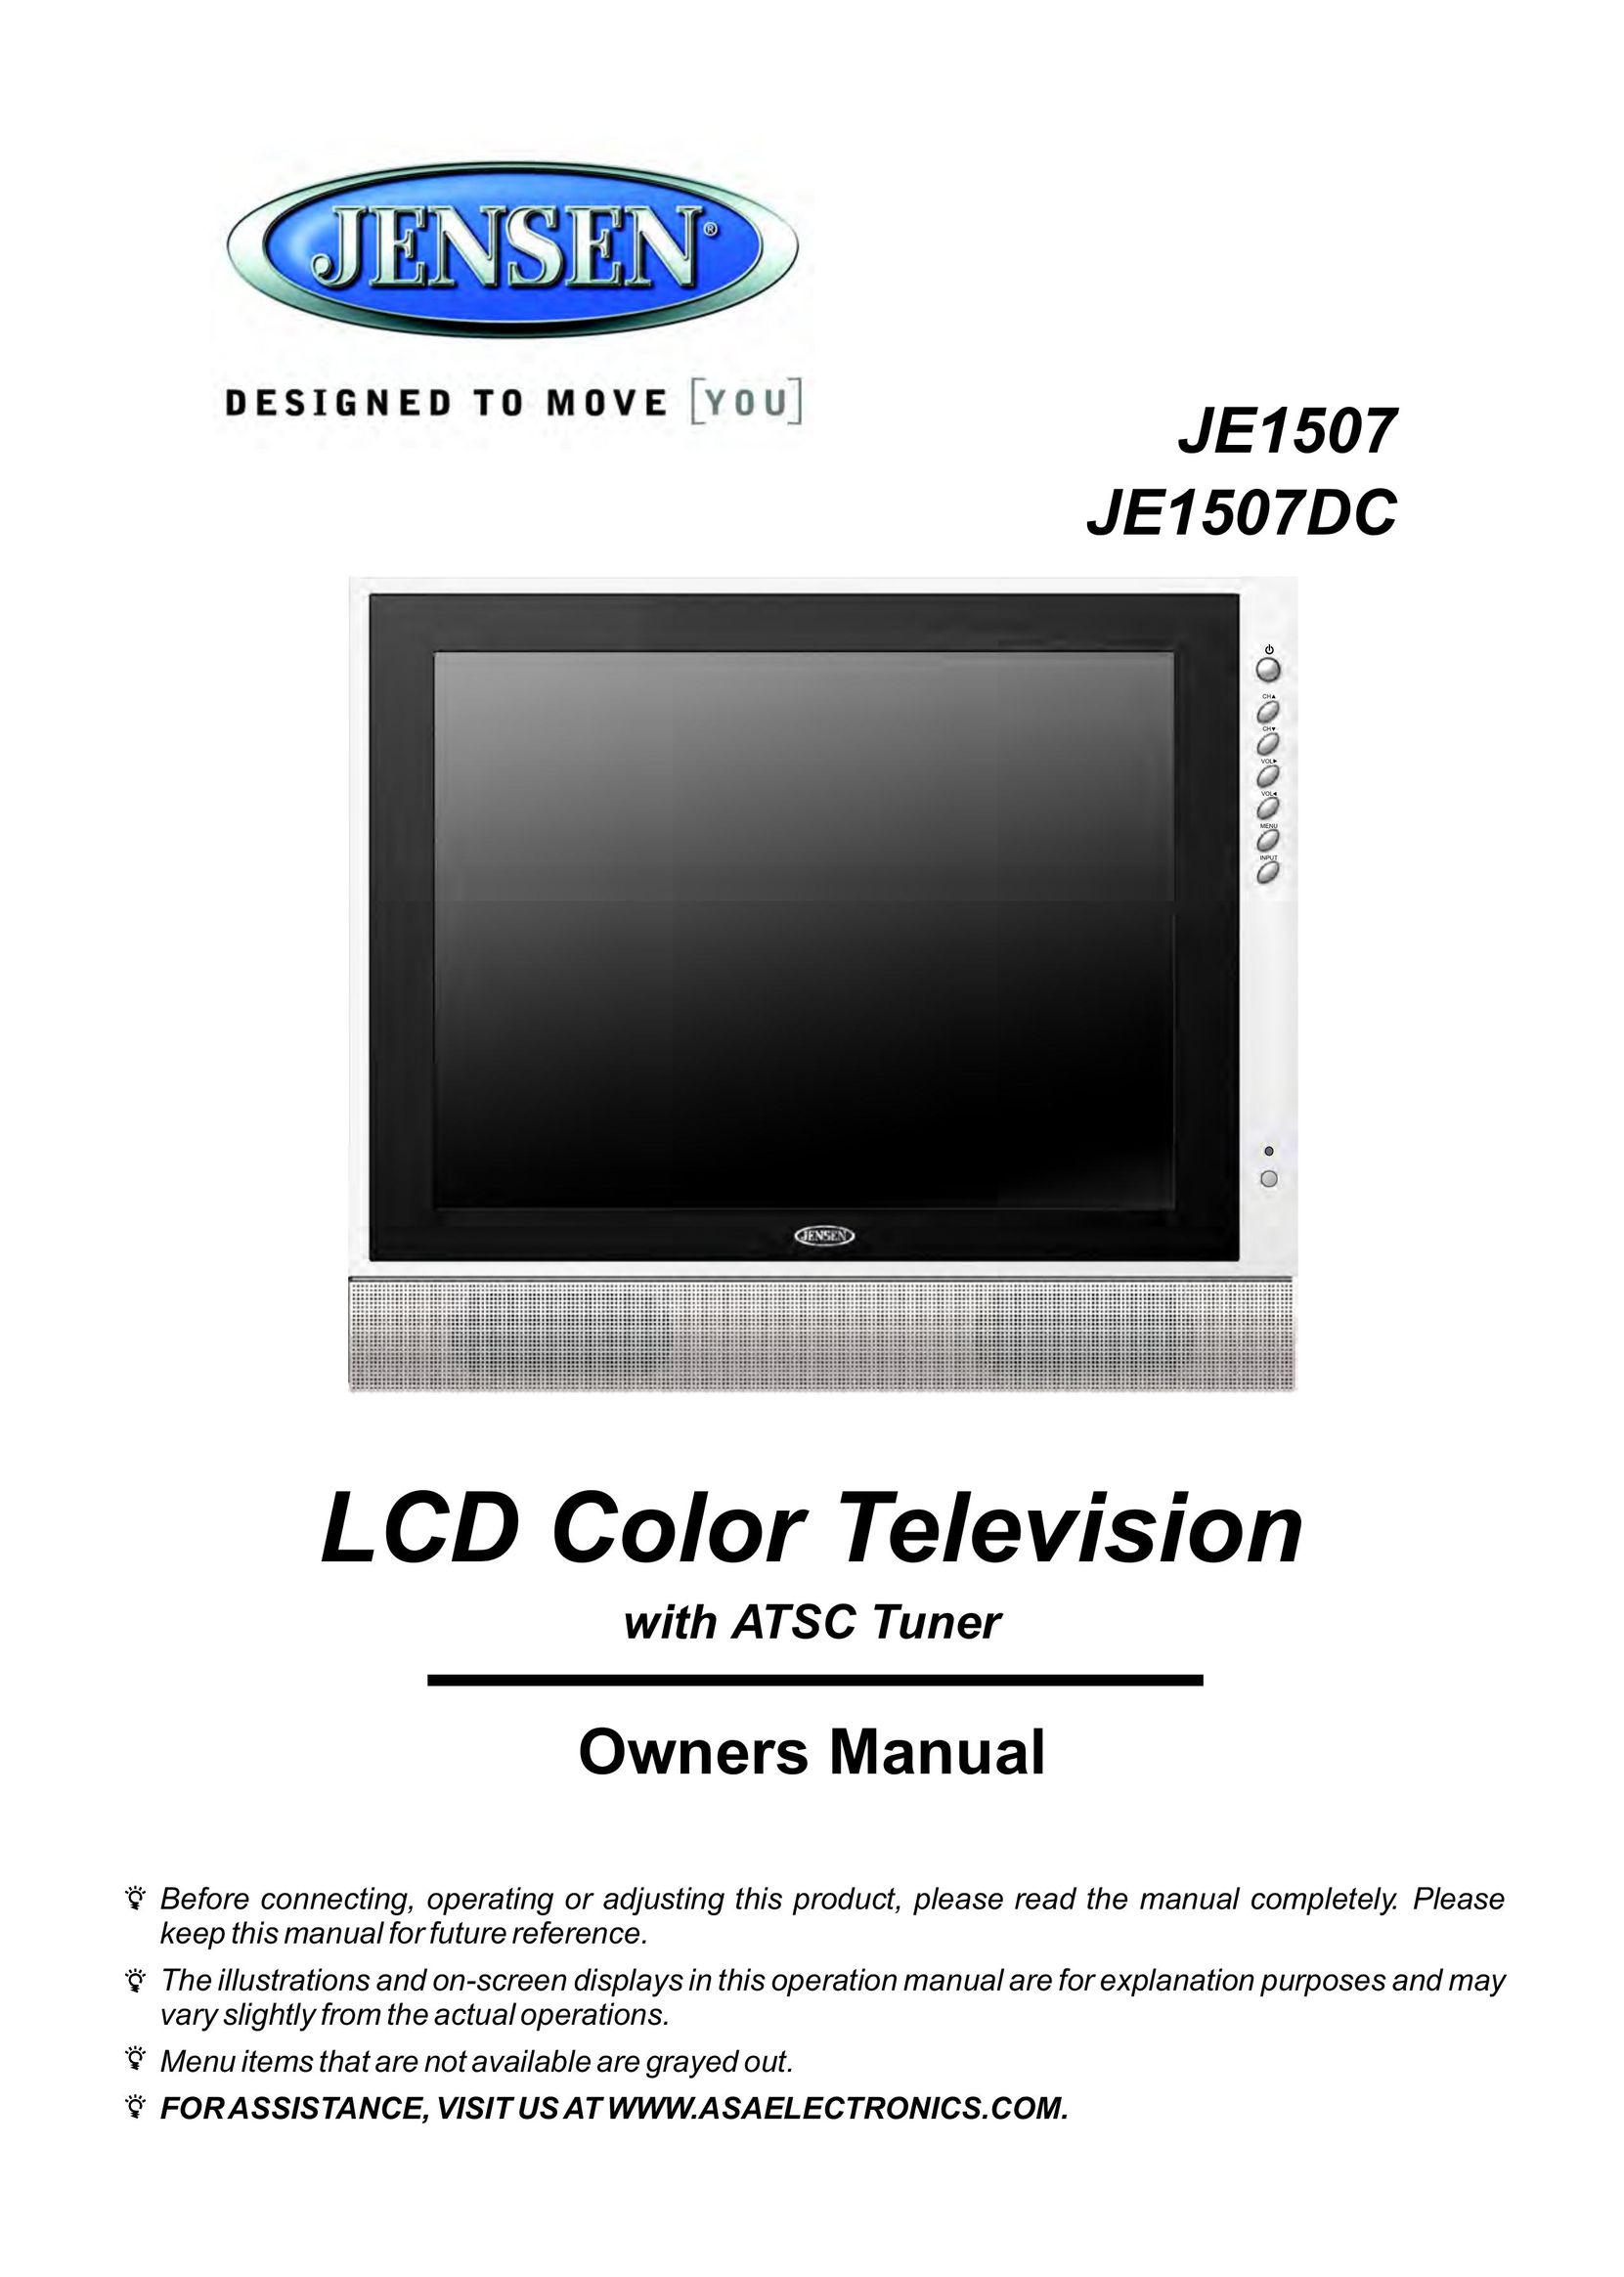 Jensen JE1507 Flat Panel Television User Manual